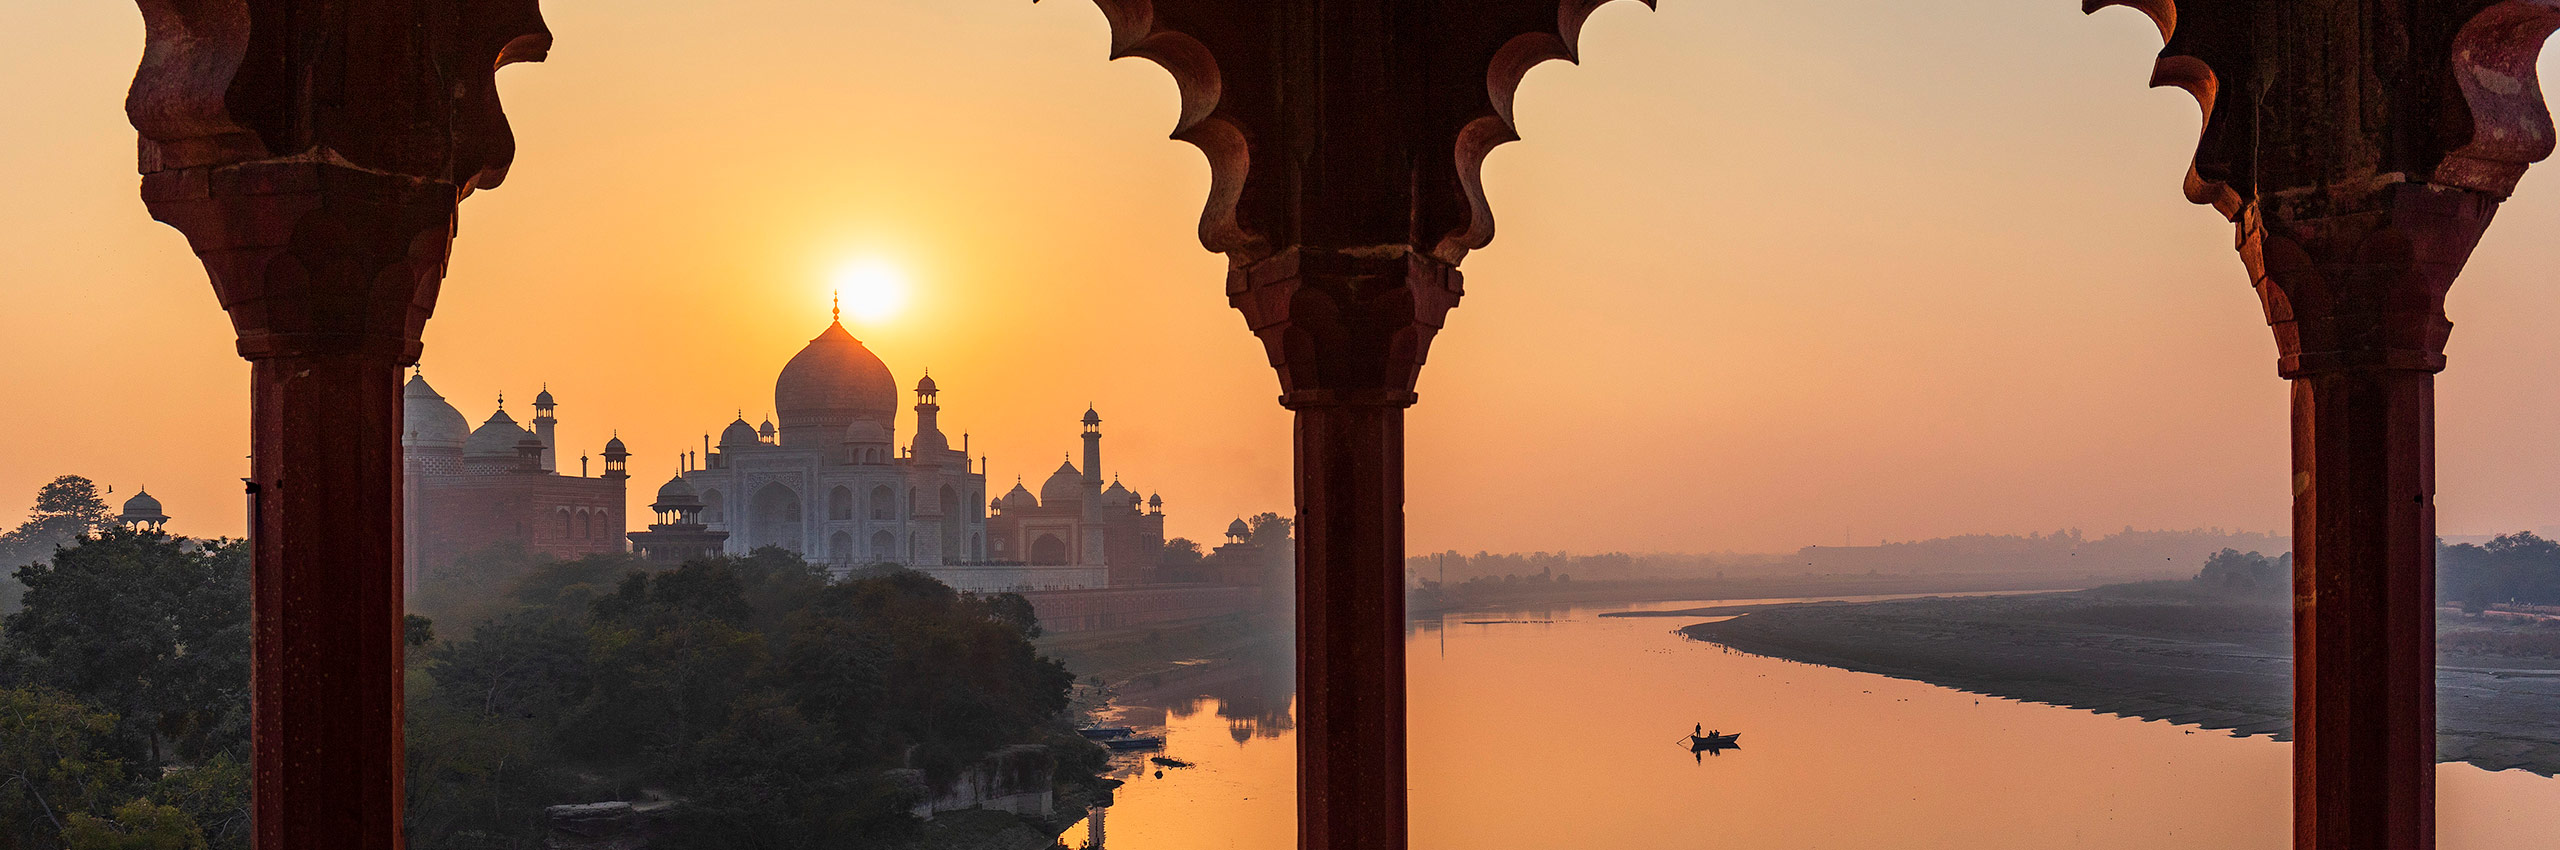 SIM-515794 | India/Uttar Pradesh, Agra, Taj Mahal | © Luigi Vaccarella/4Corners